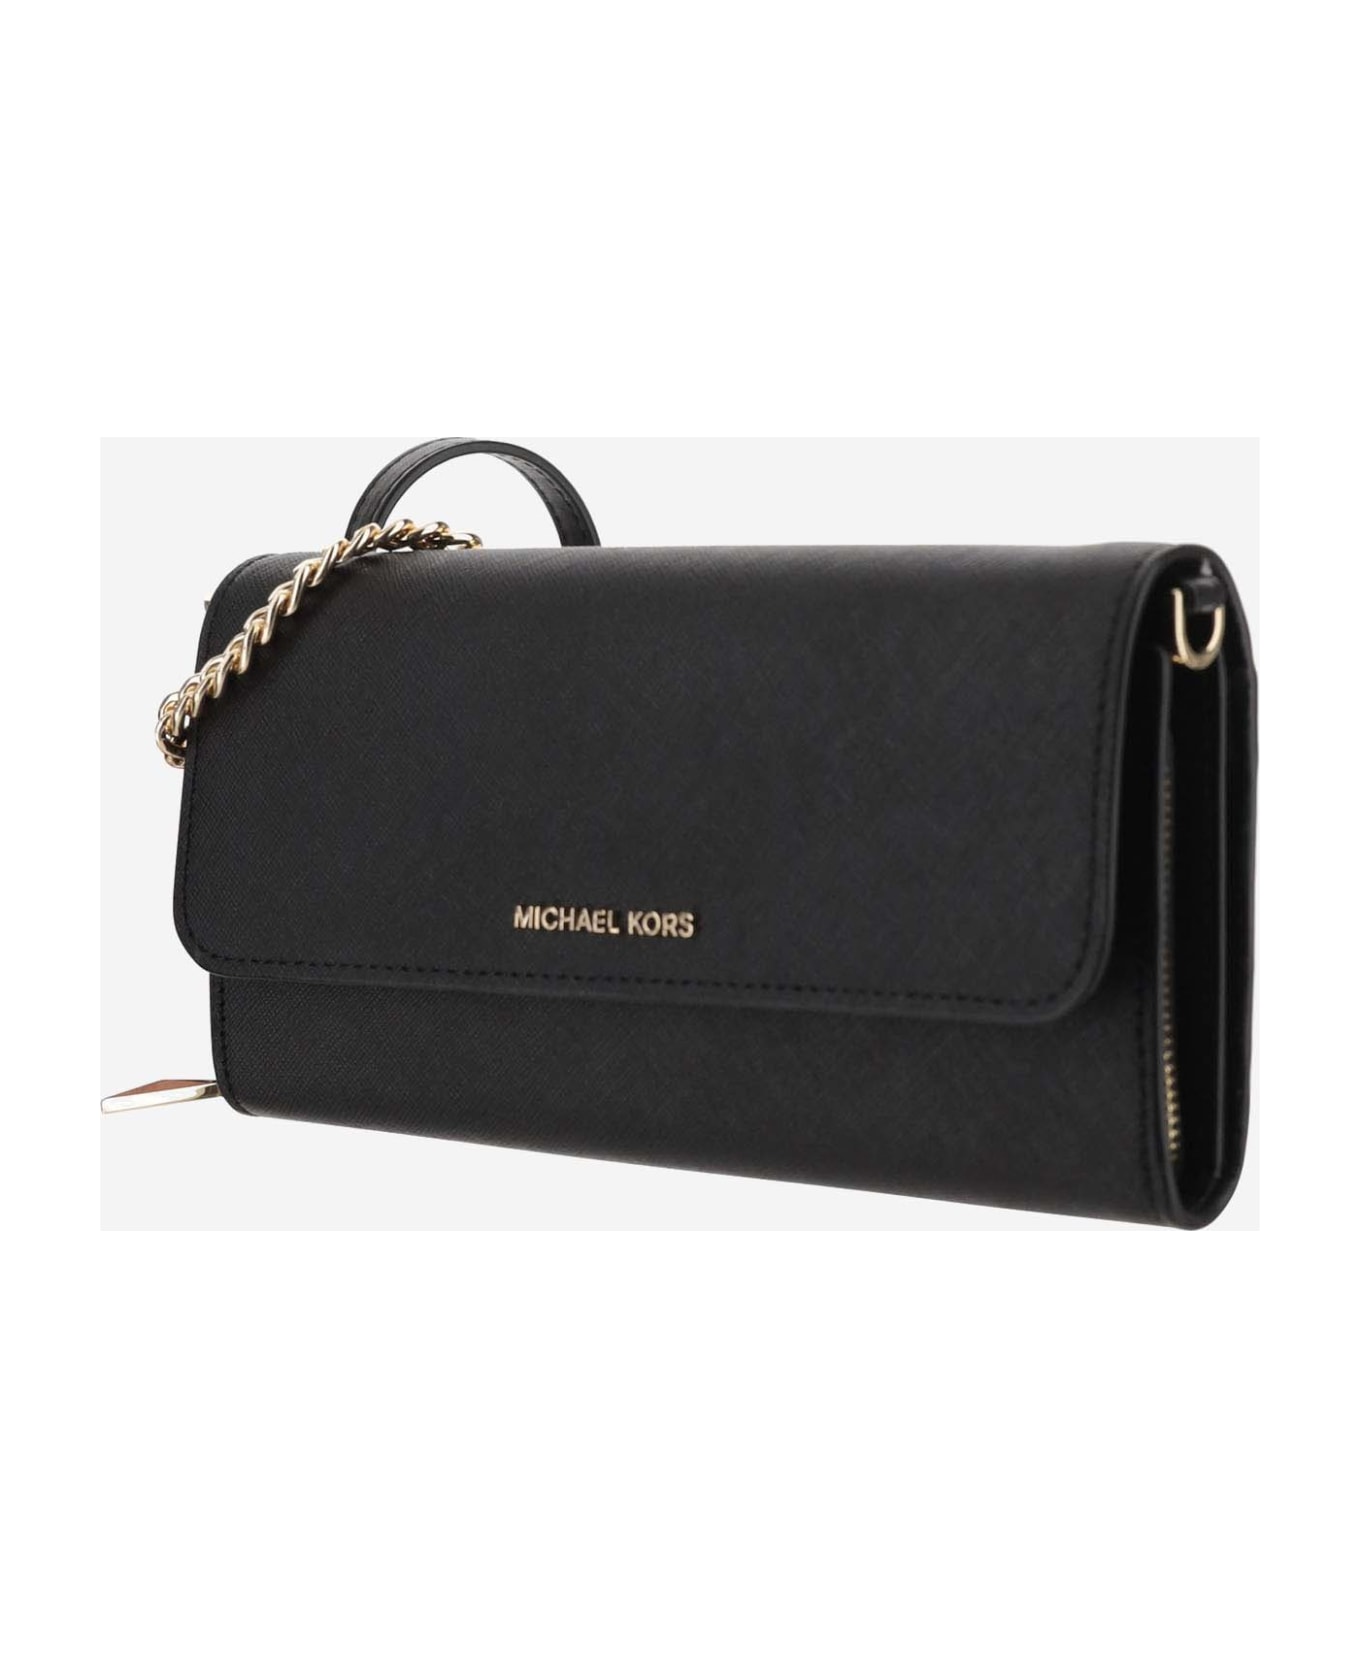 Michael Kors Wallet With Shoulder Strap - Black 財布